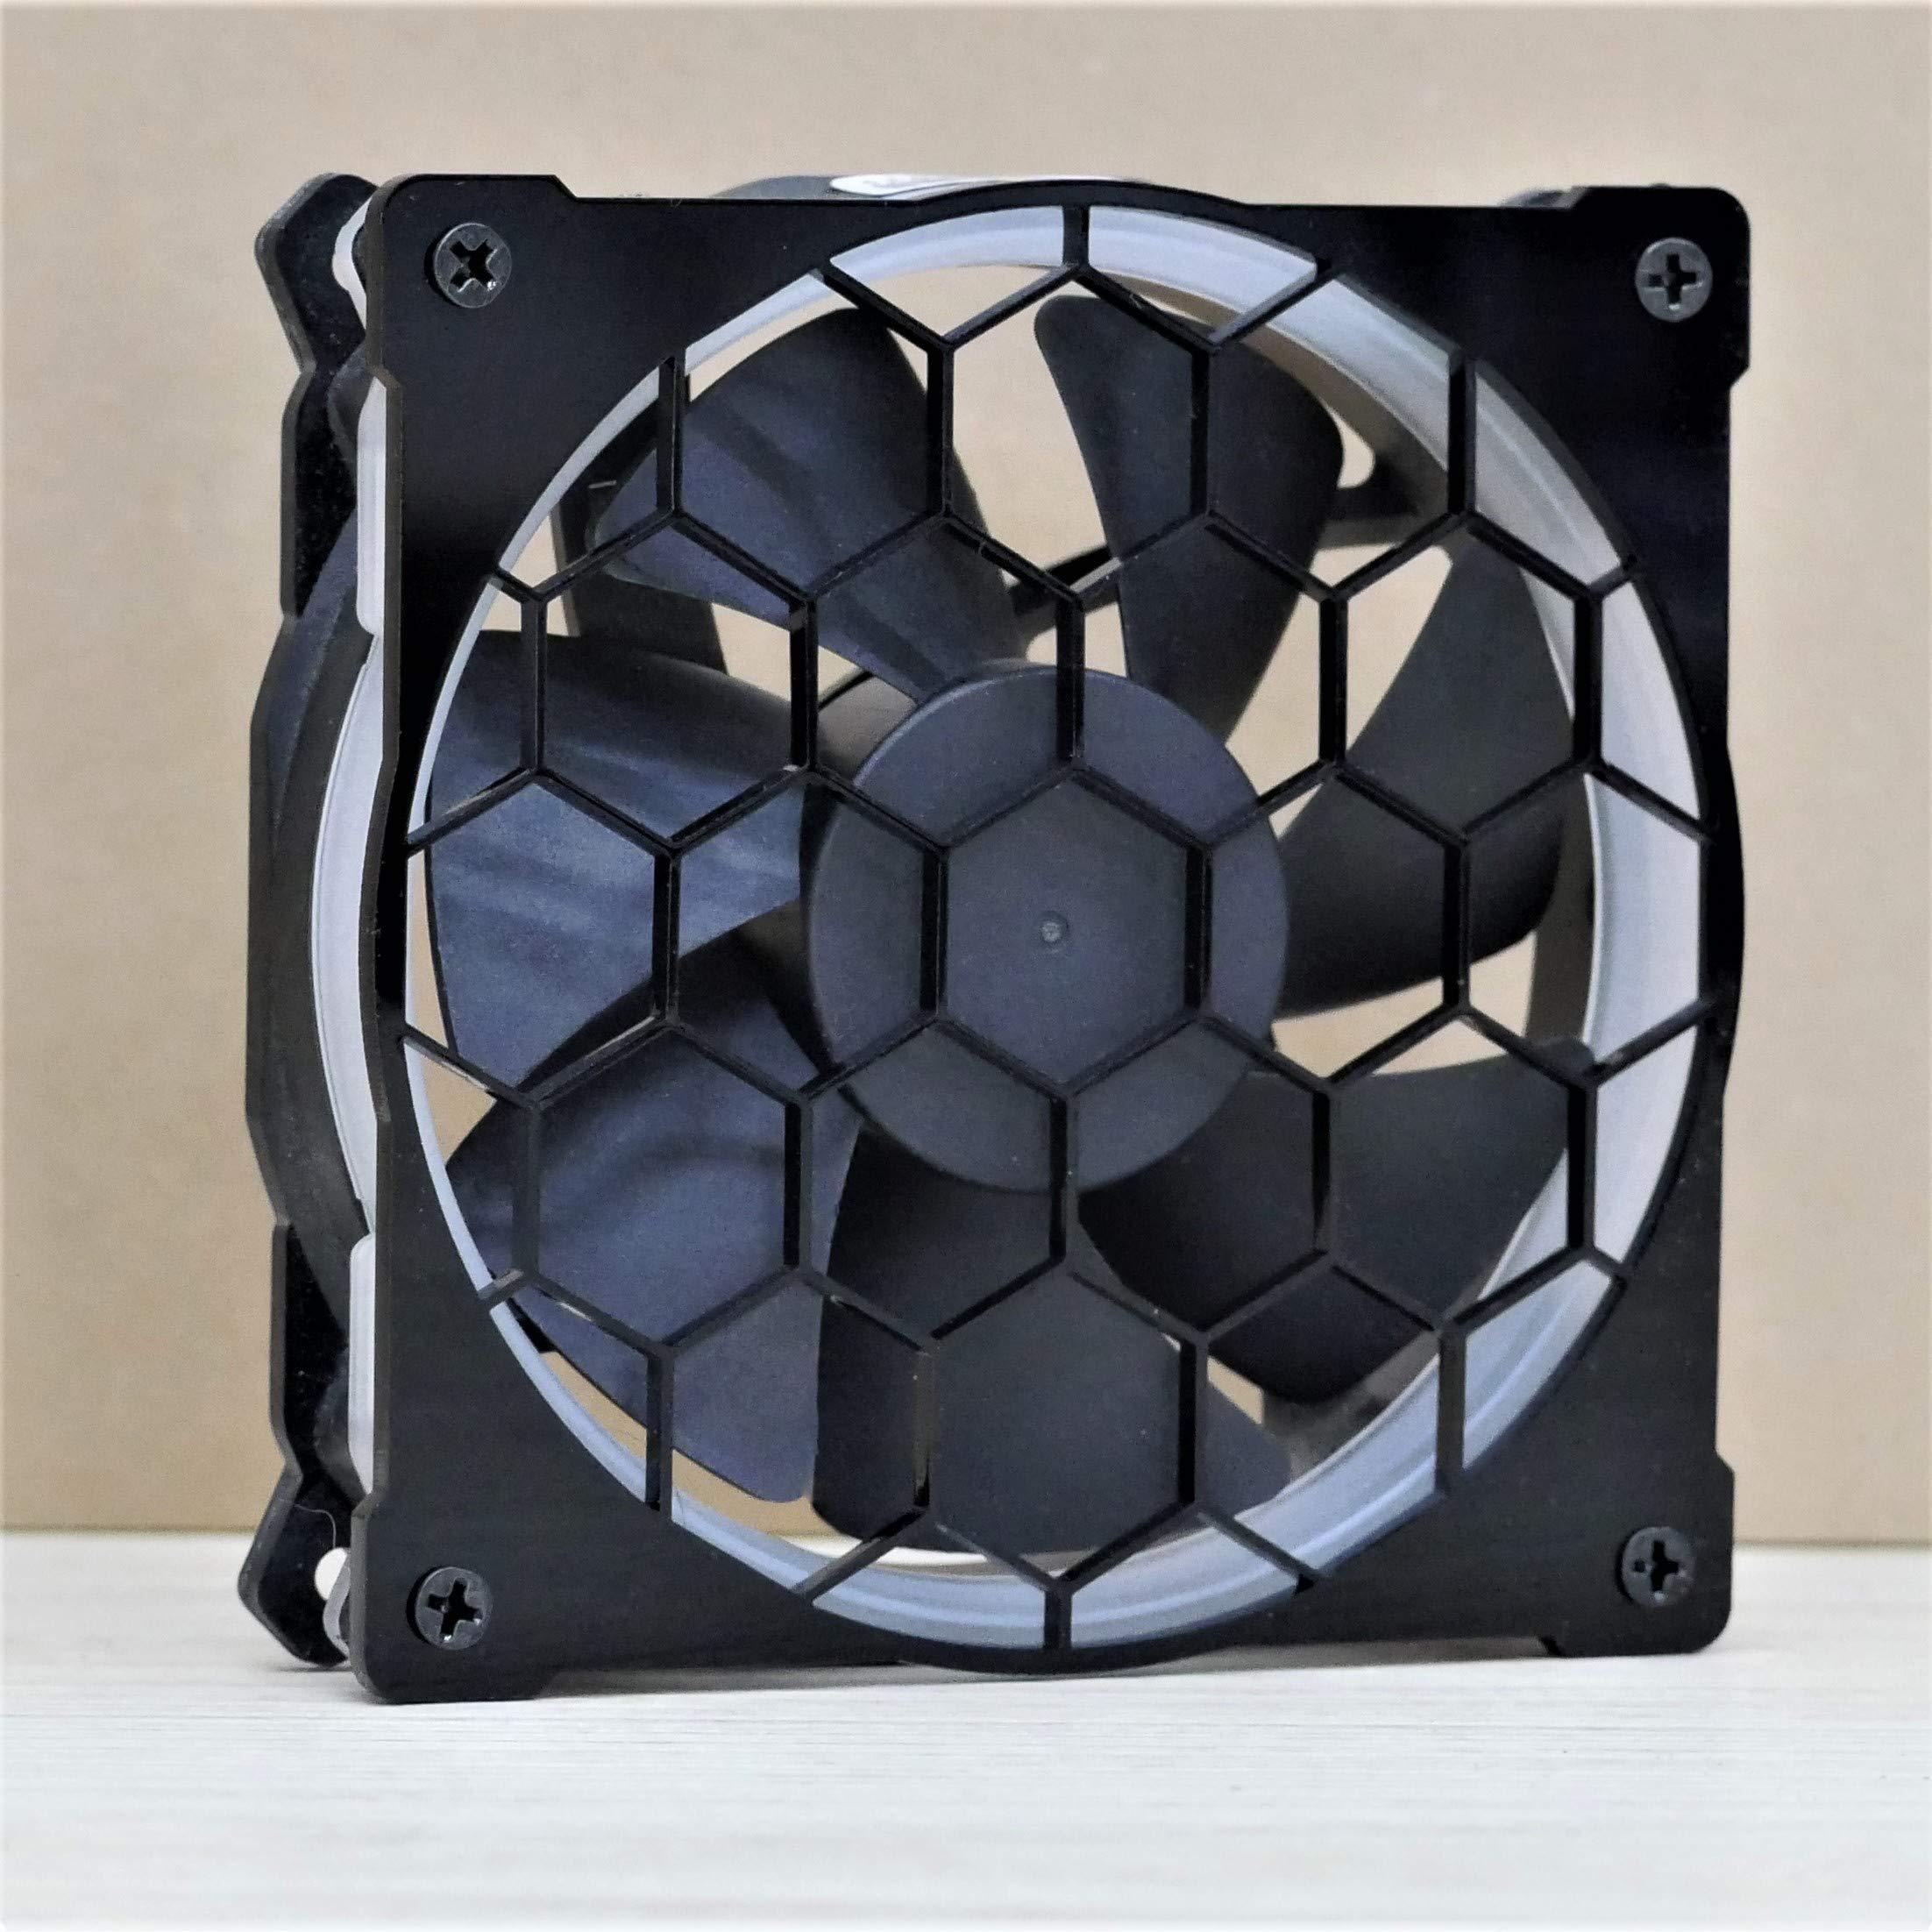 Savant PCs 120mm computer case fan cover with unique hexagon design - great for rgb argb led lighting